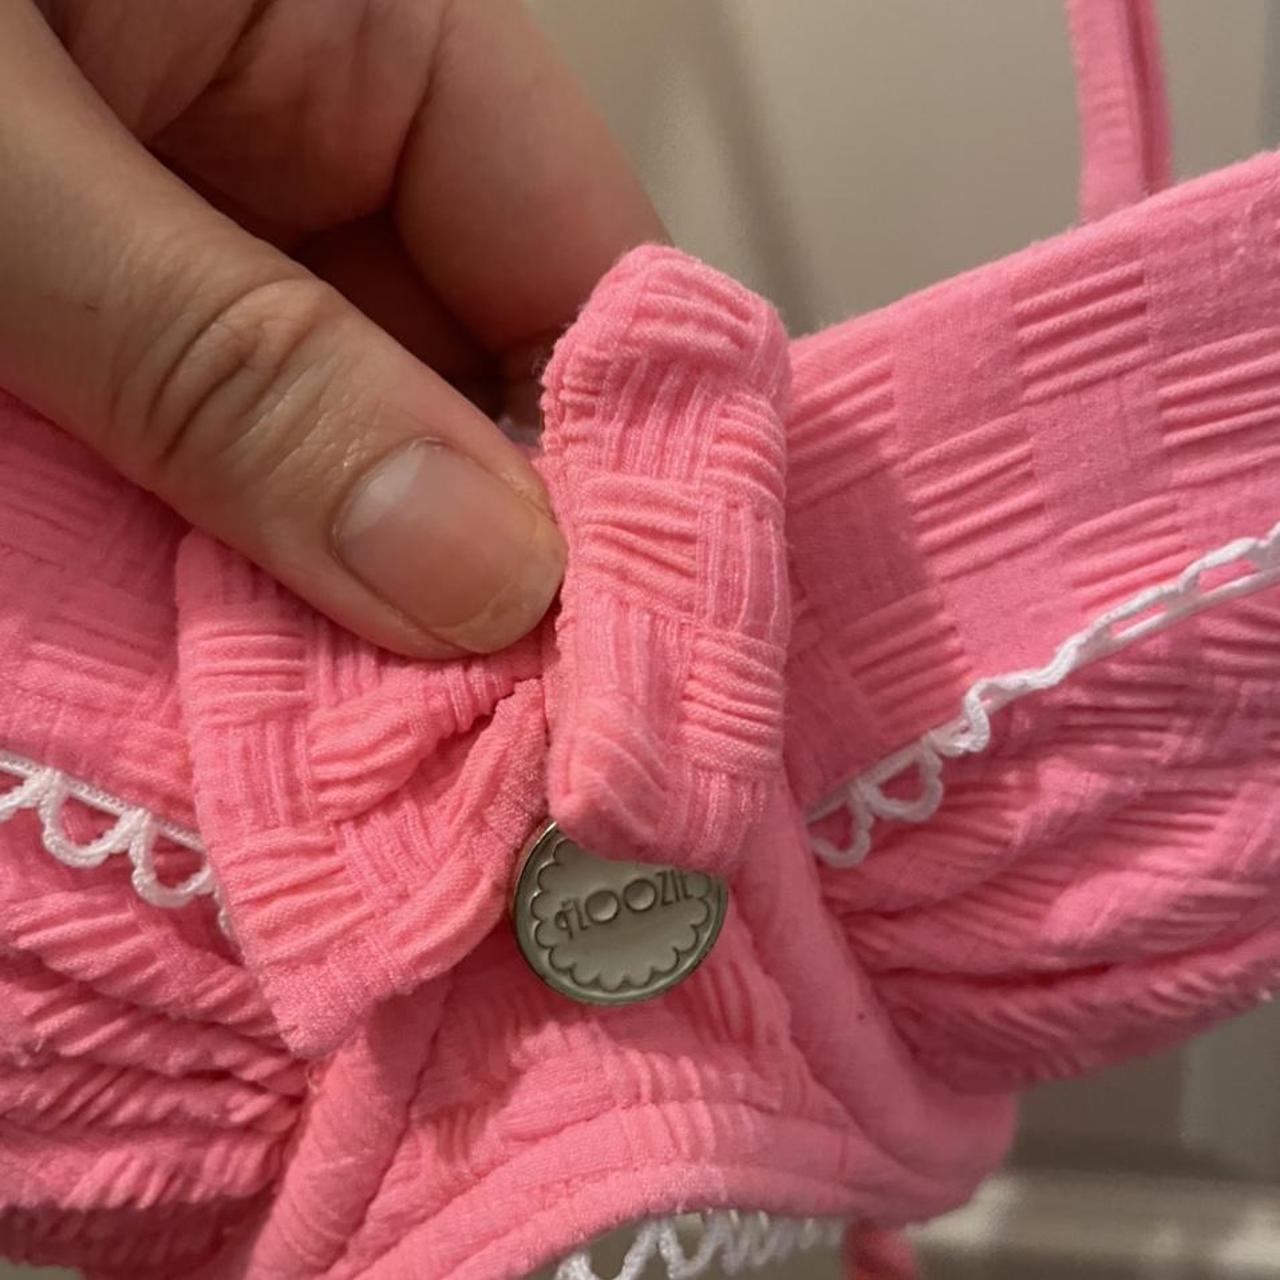 Hot Pink Bra And Panties With Cute Ribbon Detail Depop